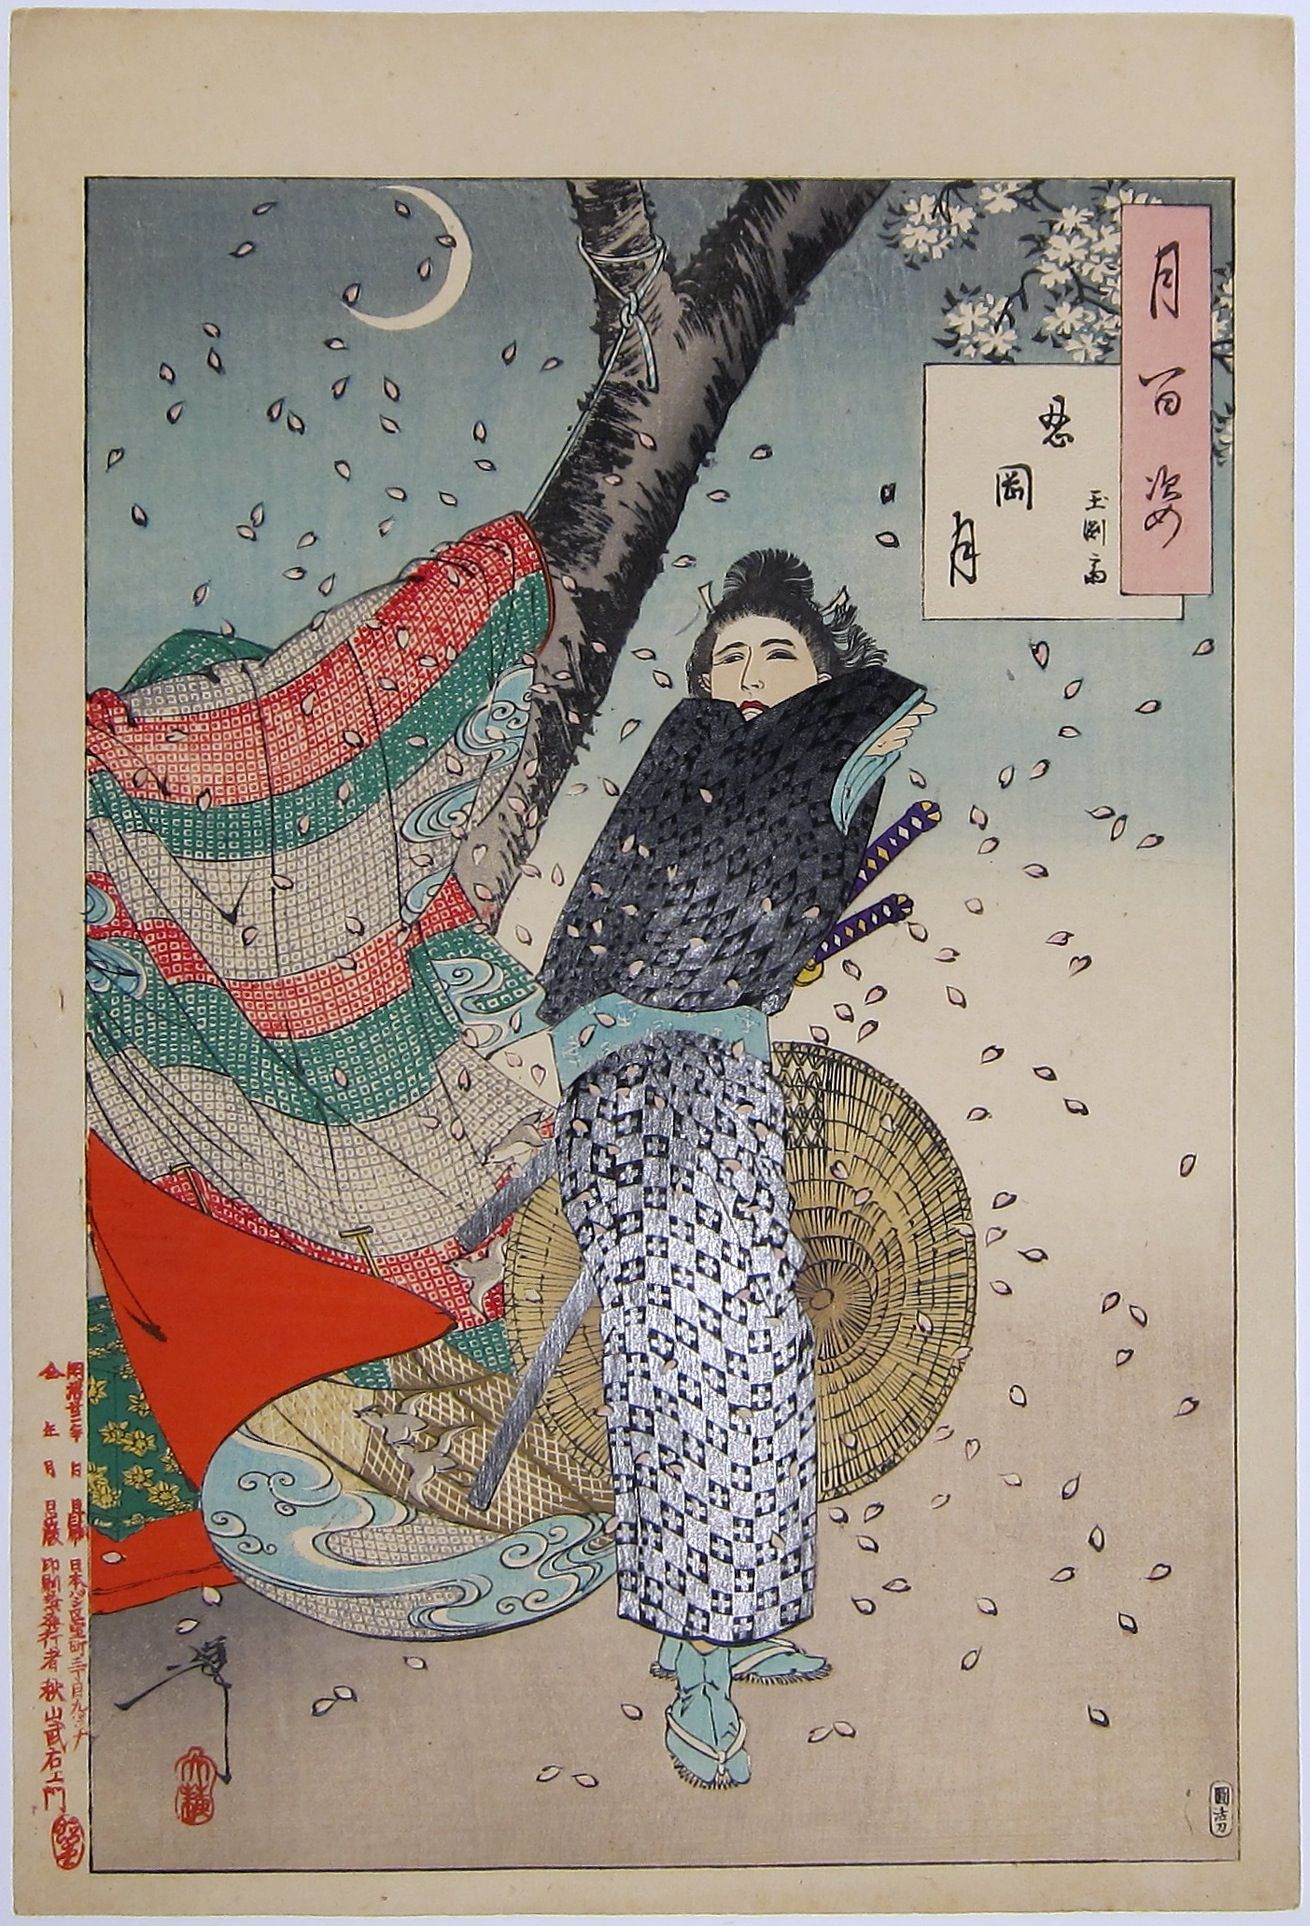 Shinobugaoka Moon. 1889.